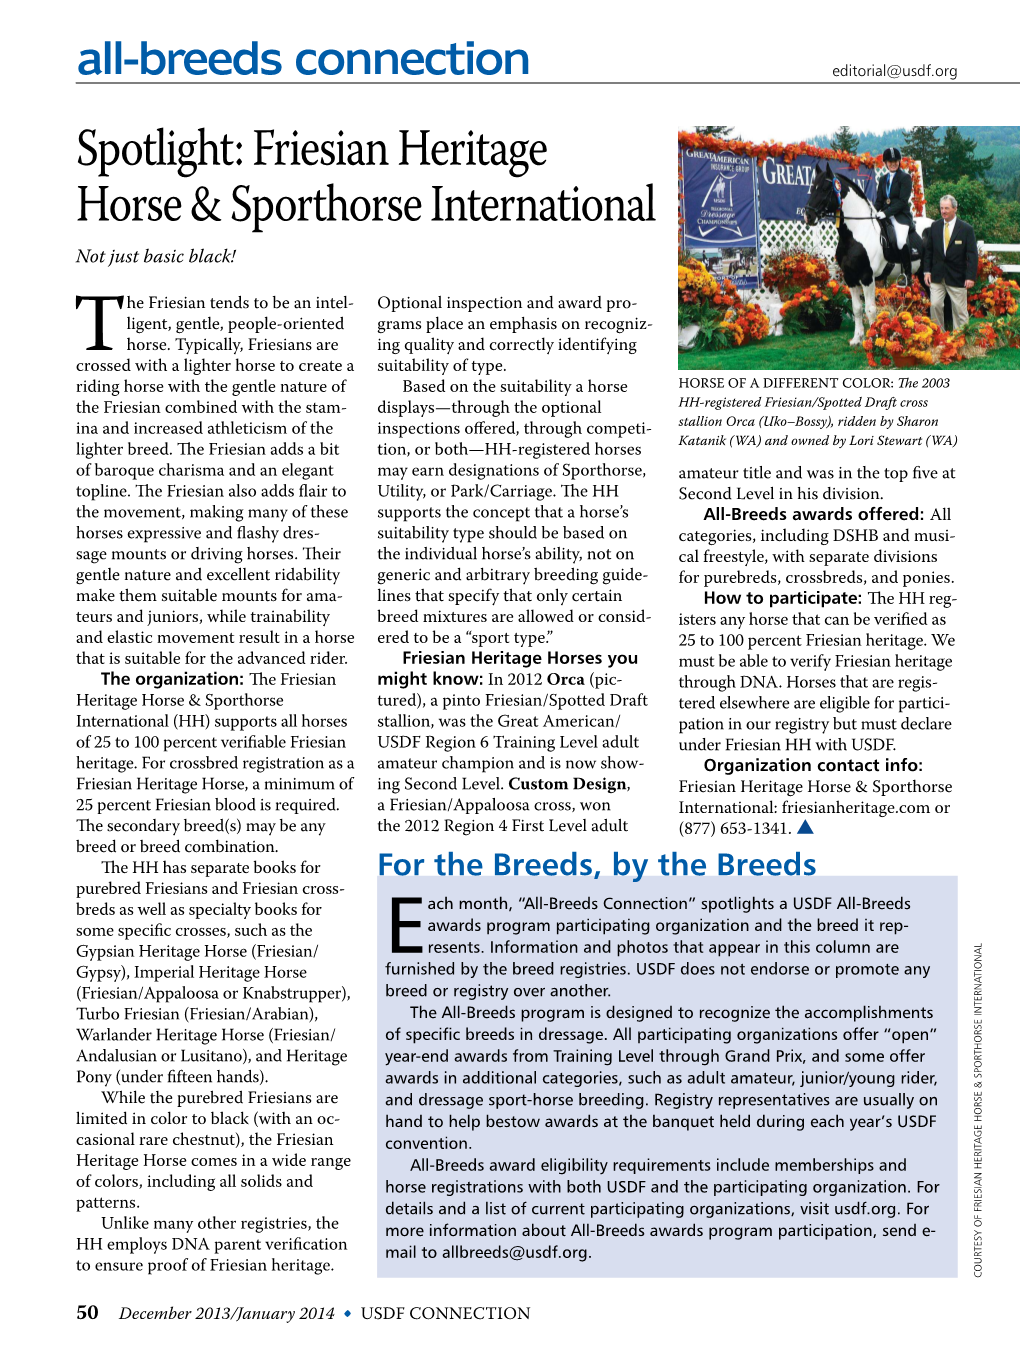 Spotlight: Friesian Heritage Horse & Sporthorse International